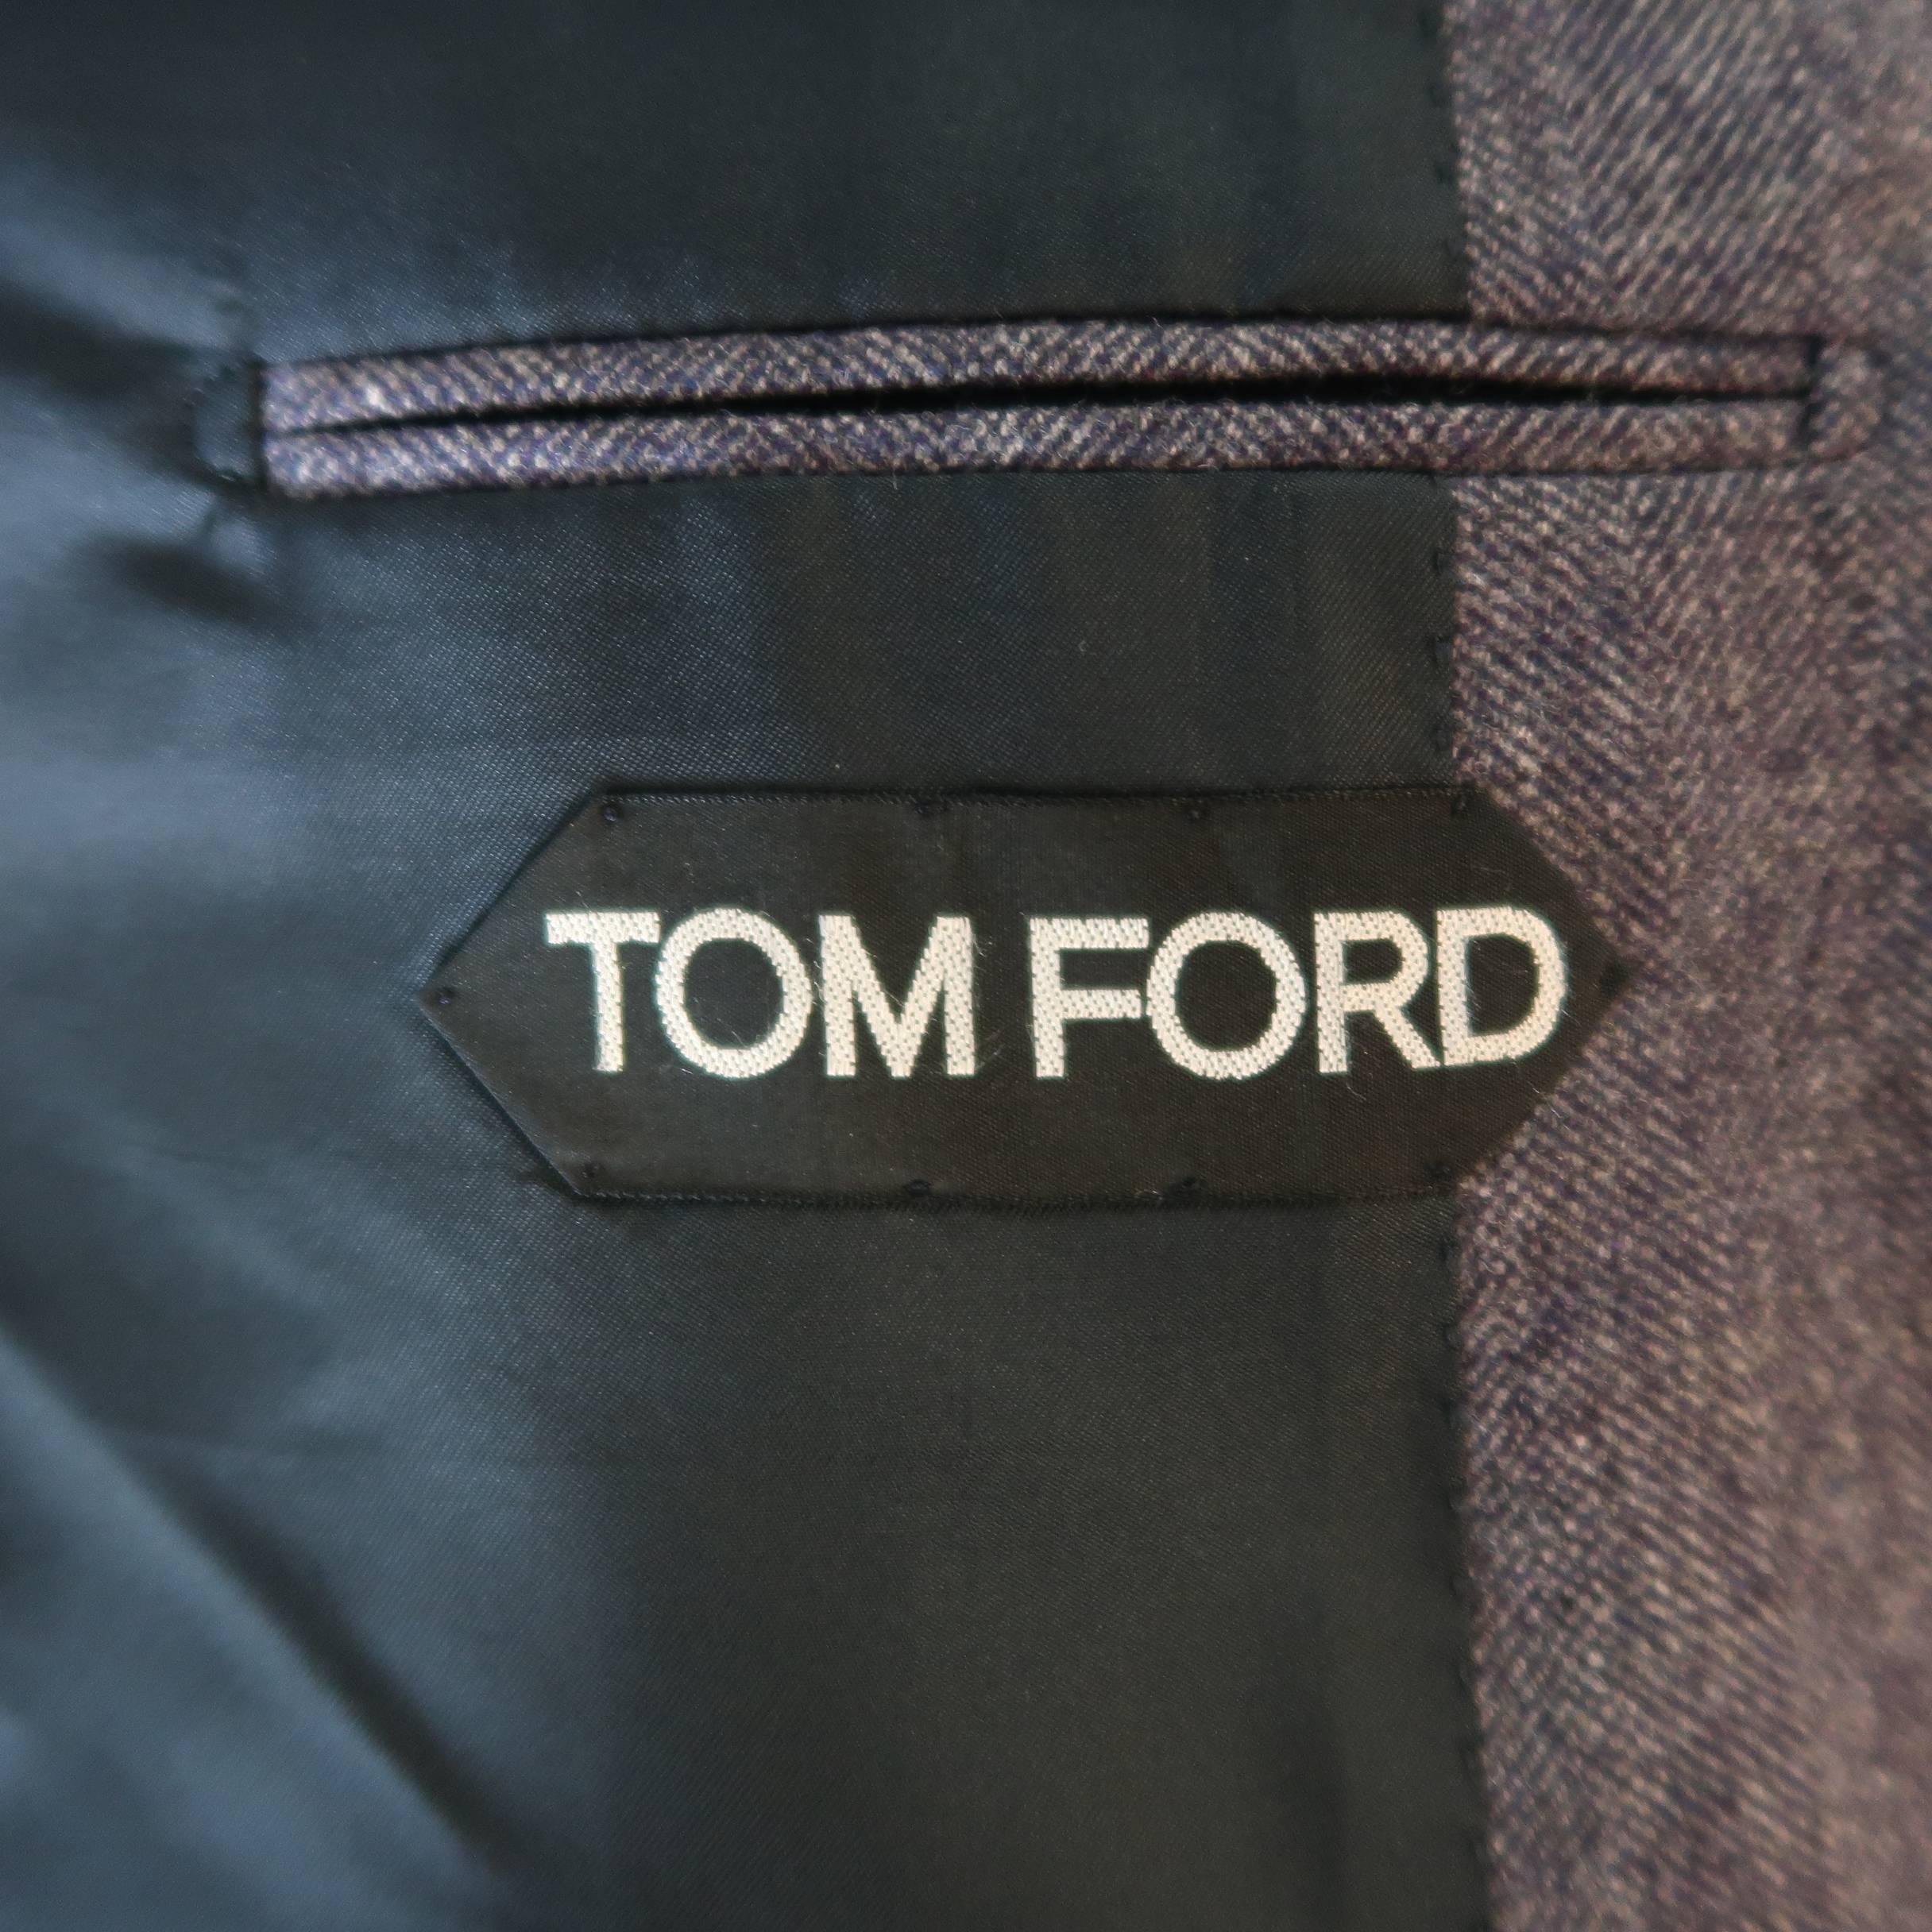 Tom Ford Sport Coat - Men's Light Purple Wool / Cashmere Jacket ...